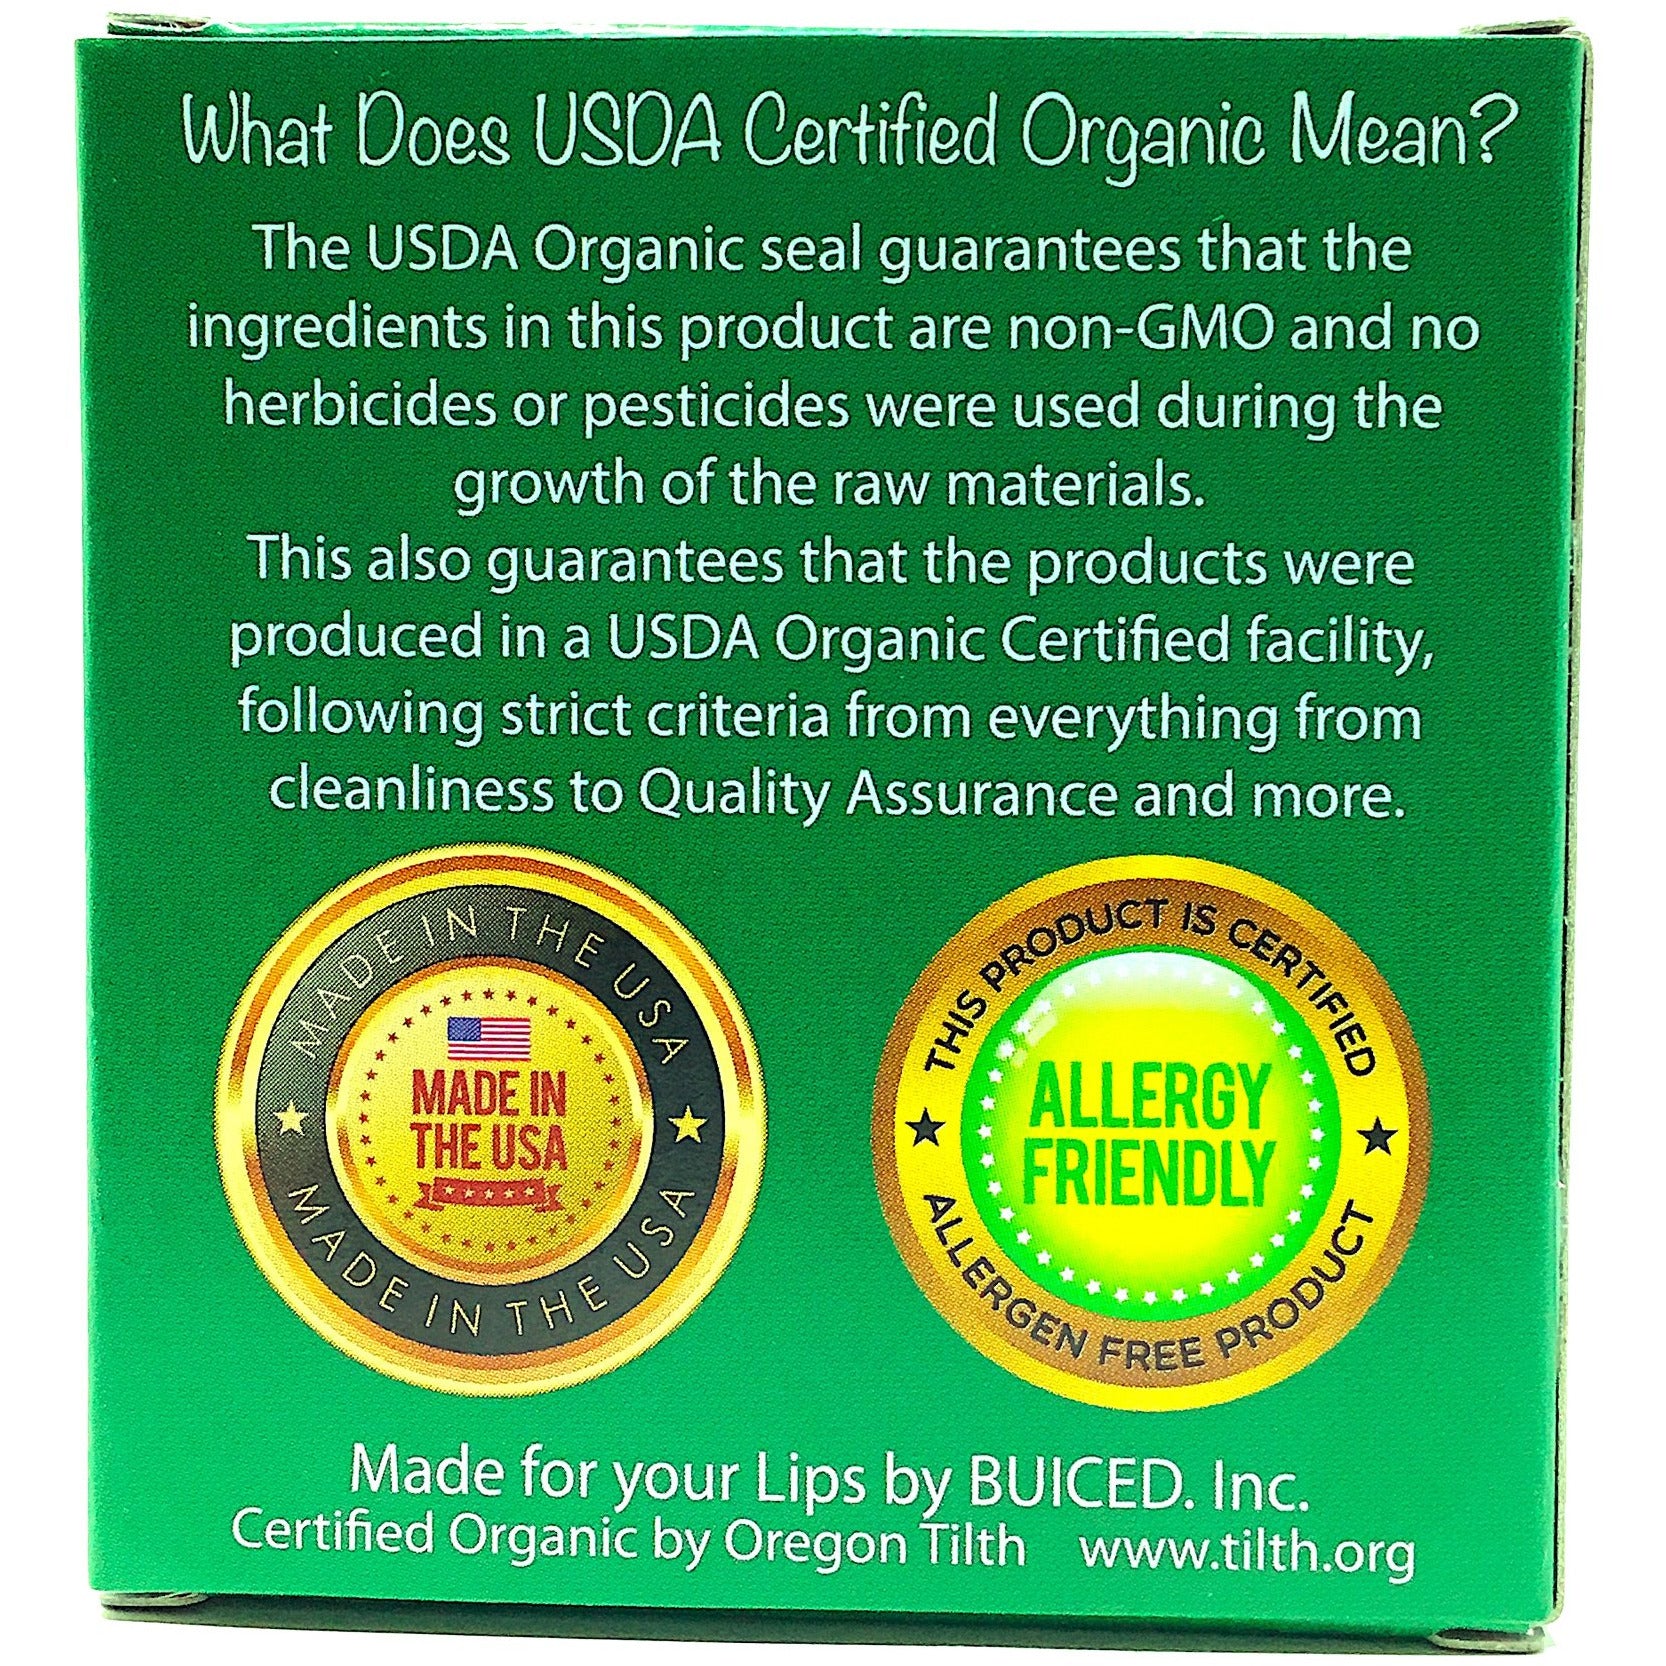 USDA Certified Organic - Spearmint 4pack - Buiced Liquid Multivitamin | Gluten Free Vitamins | GMO Free Vitamins | Made in USA Vitamins | Best Multivitamin 